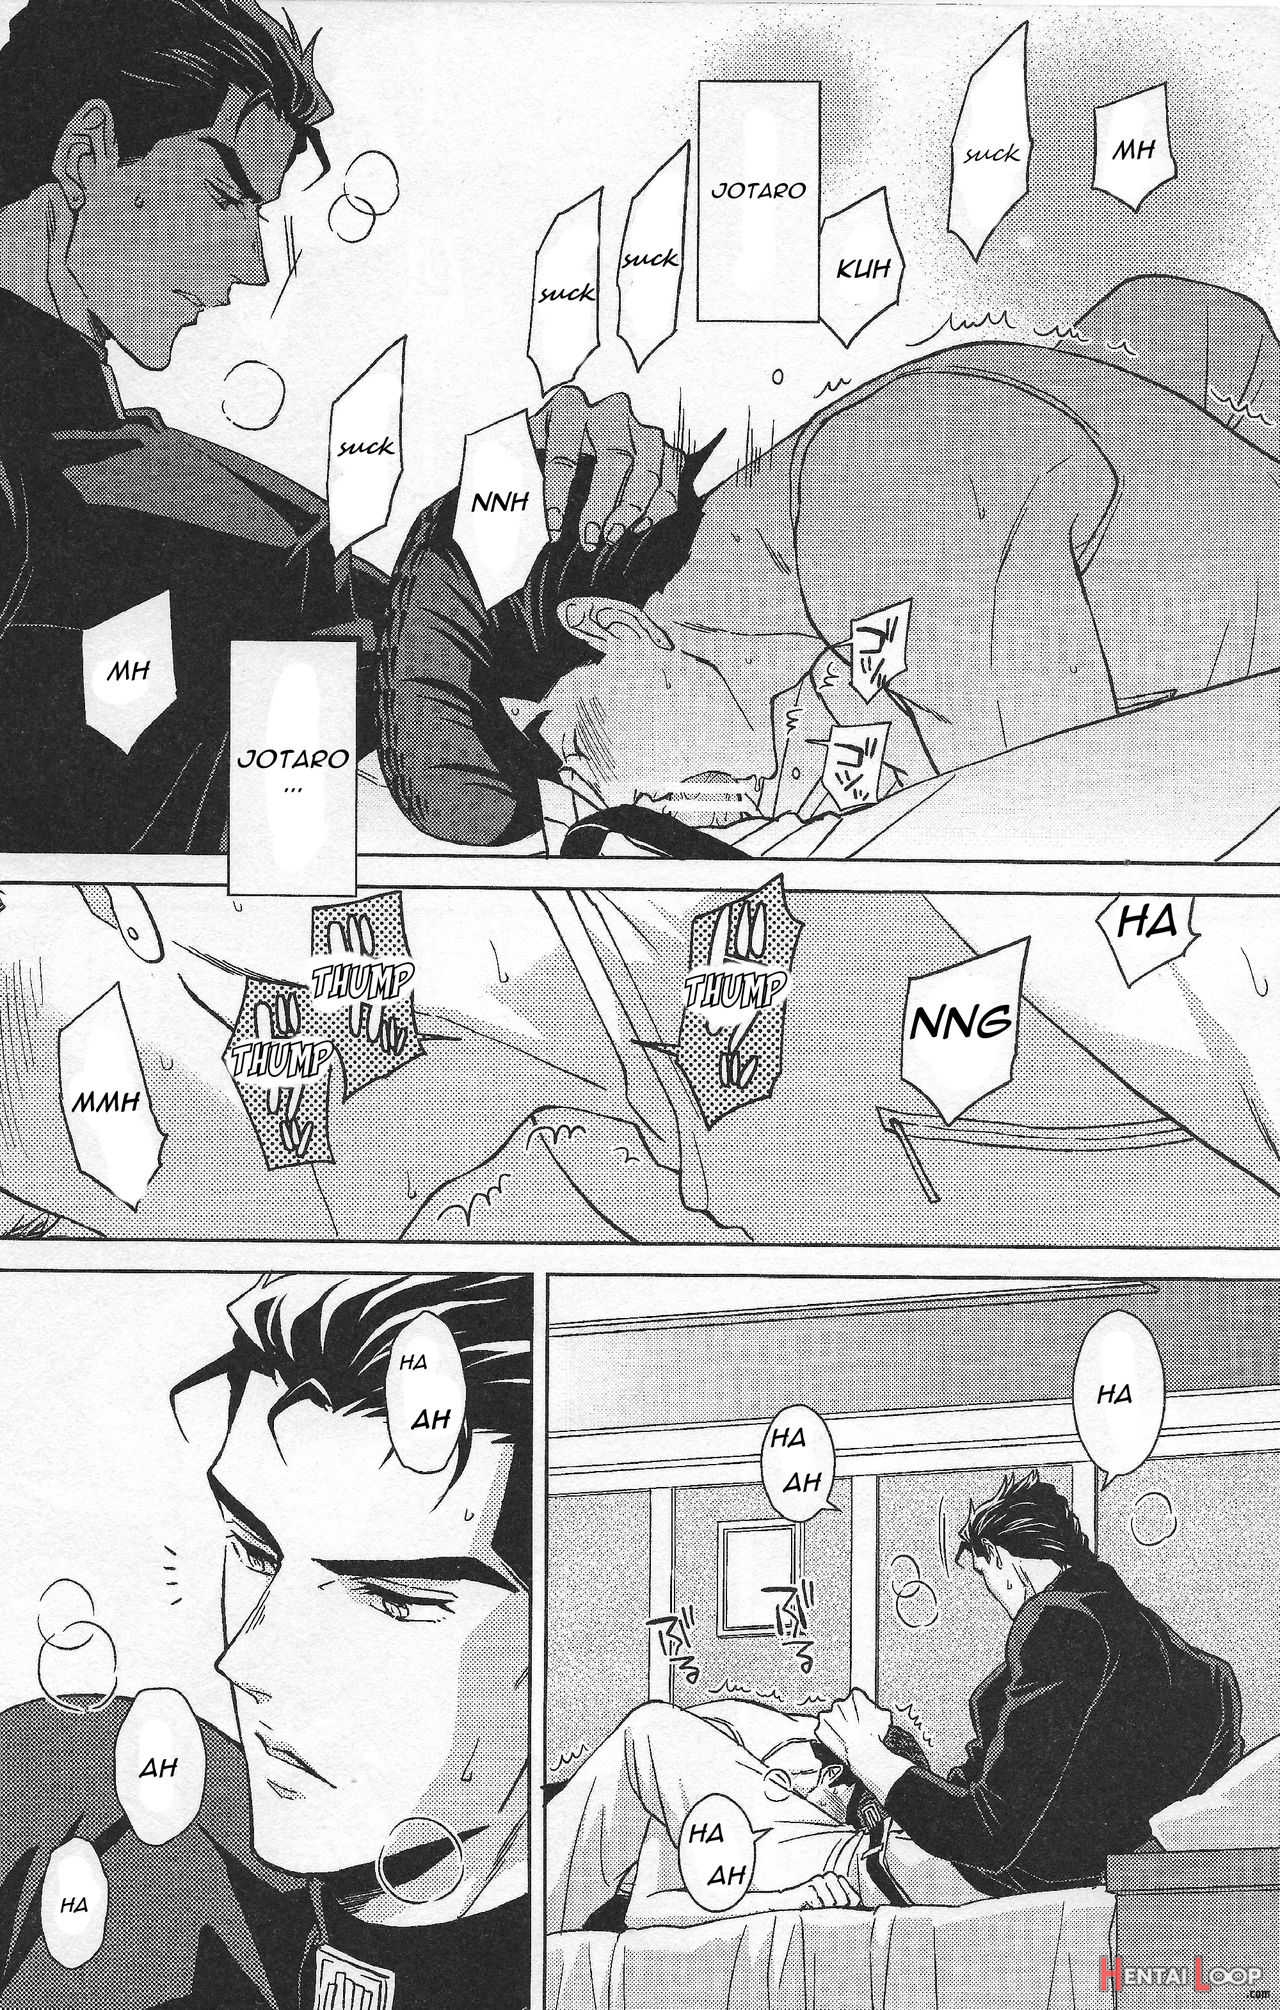 The Melancholy Of Josuke Higashikata page 19